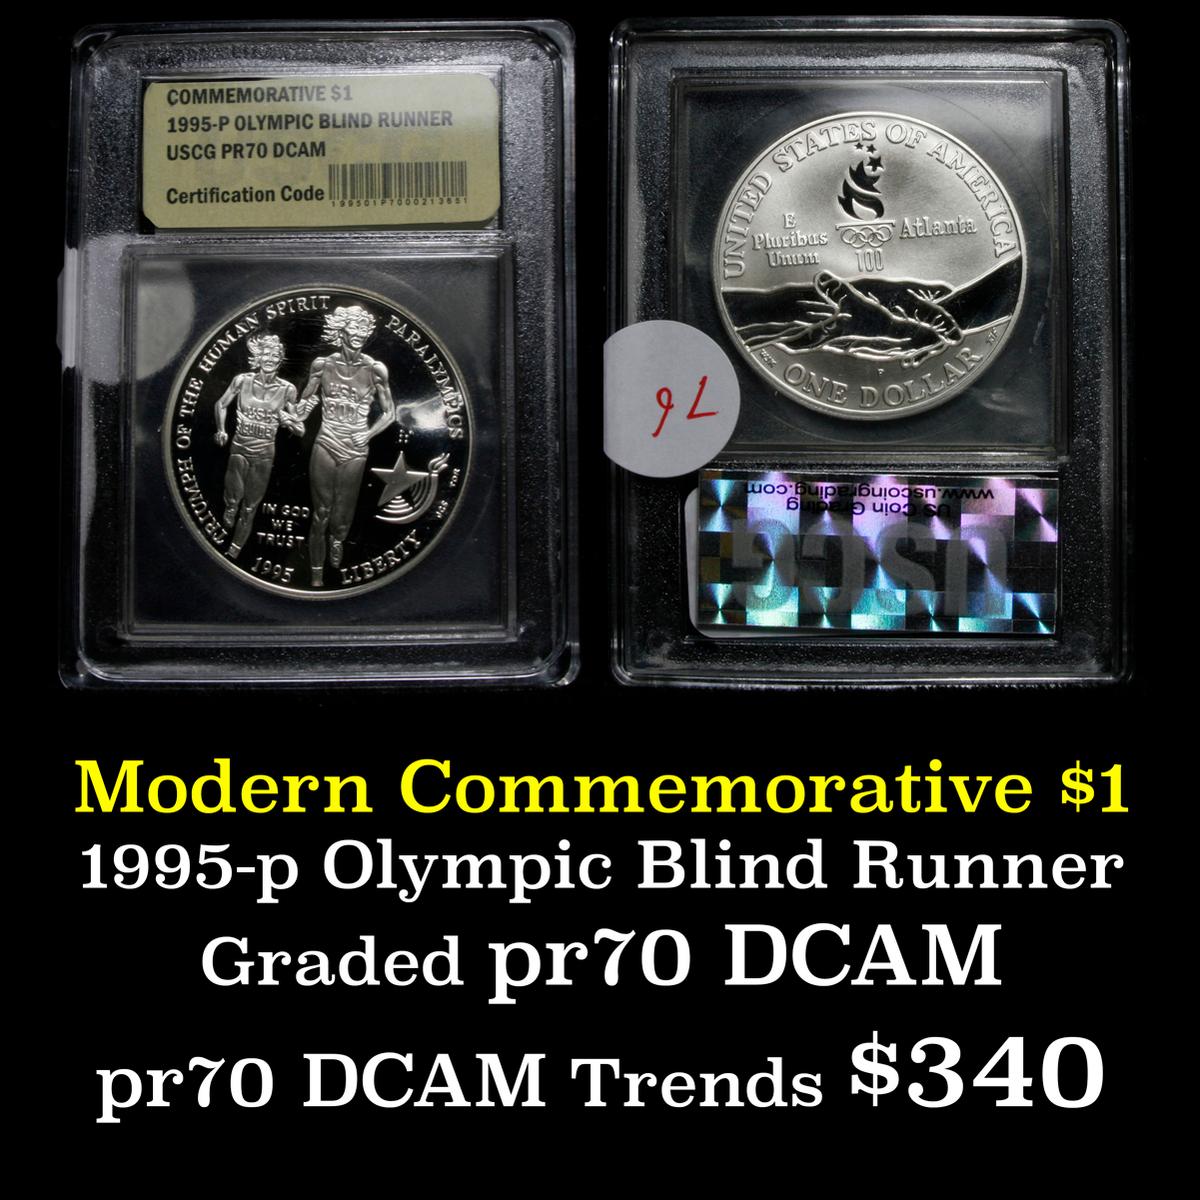 1995-p Paralympics (Blind Runner) Proof Modern Commem Dollar $1 Graded GEM++ Proof DCAM by USCG